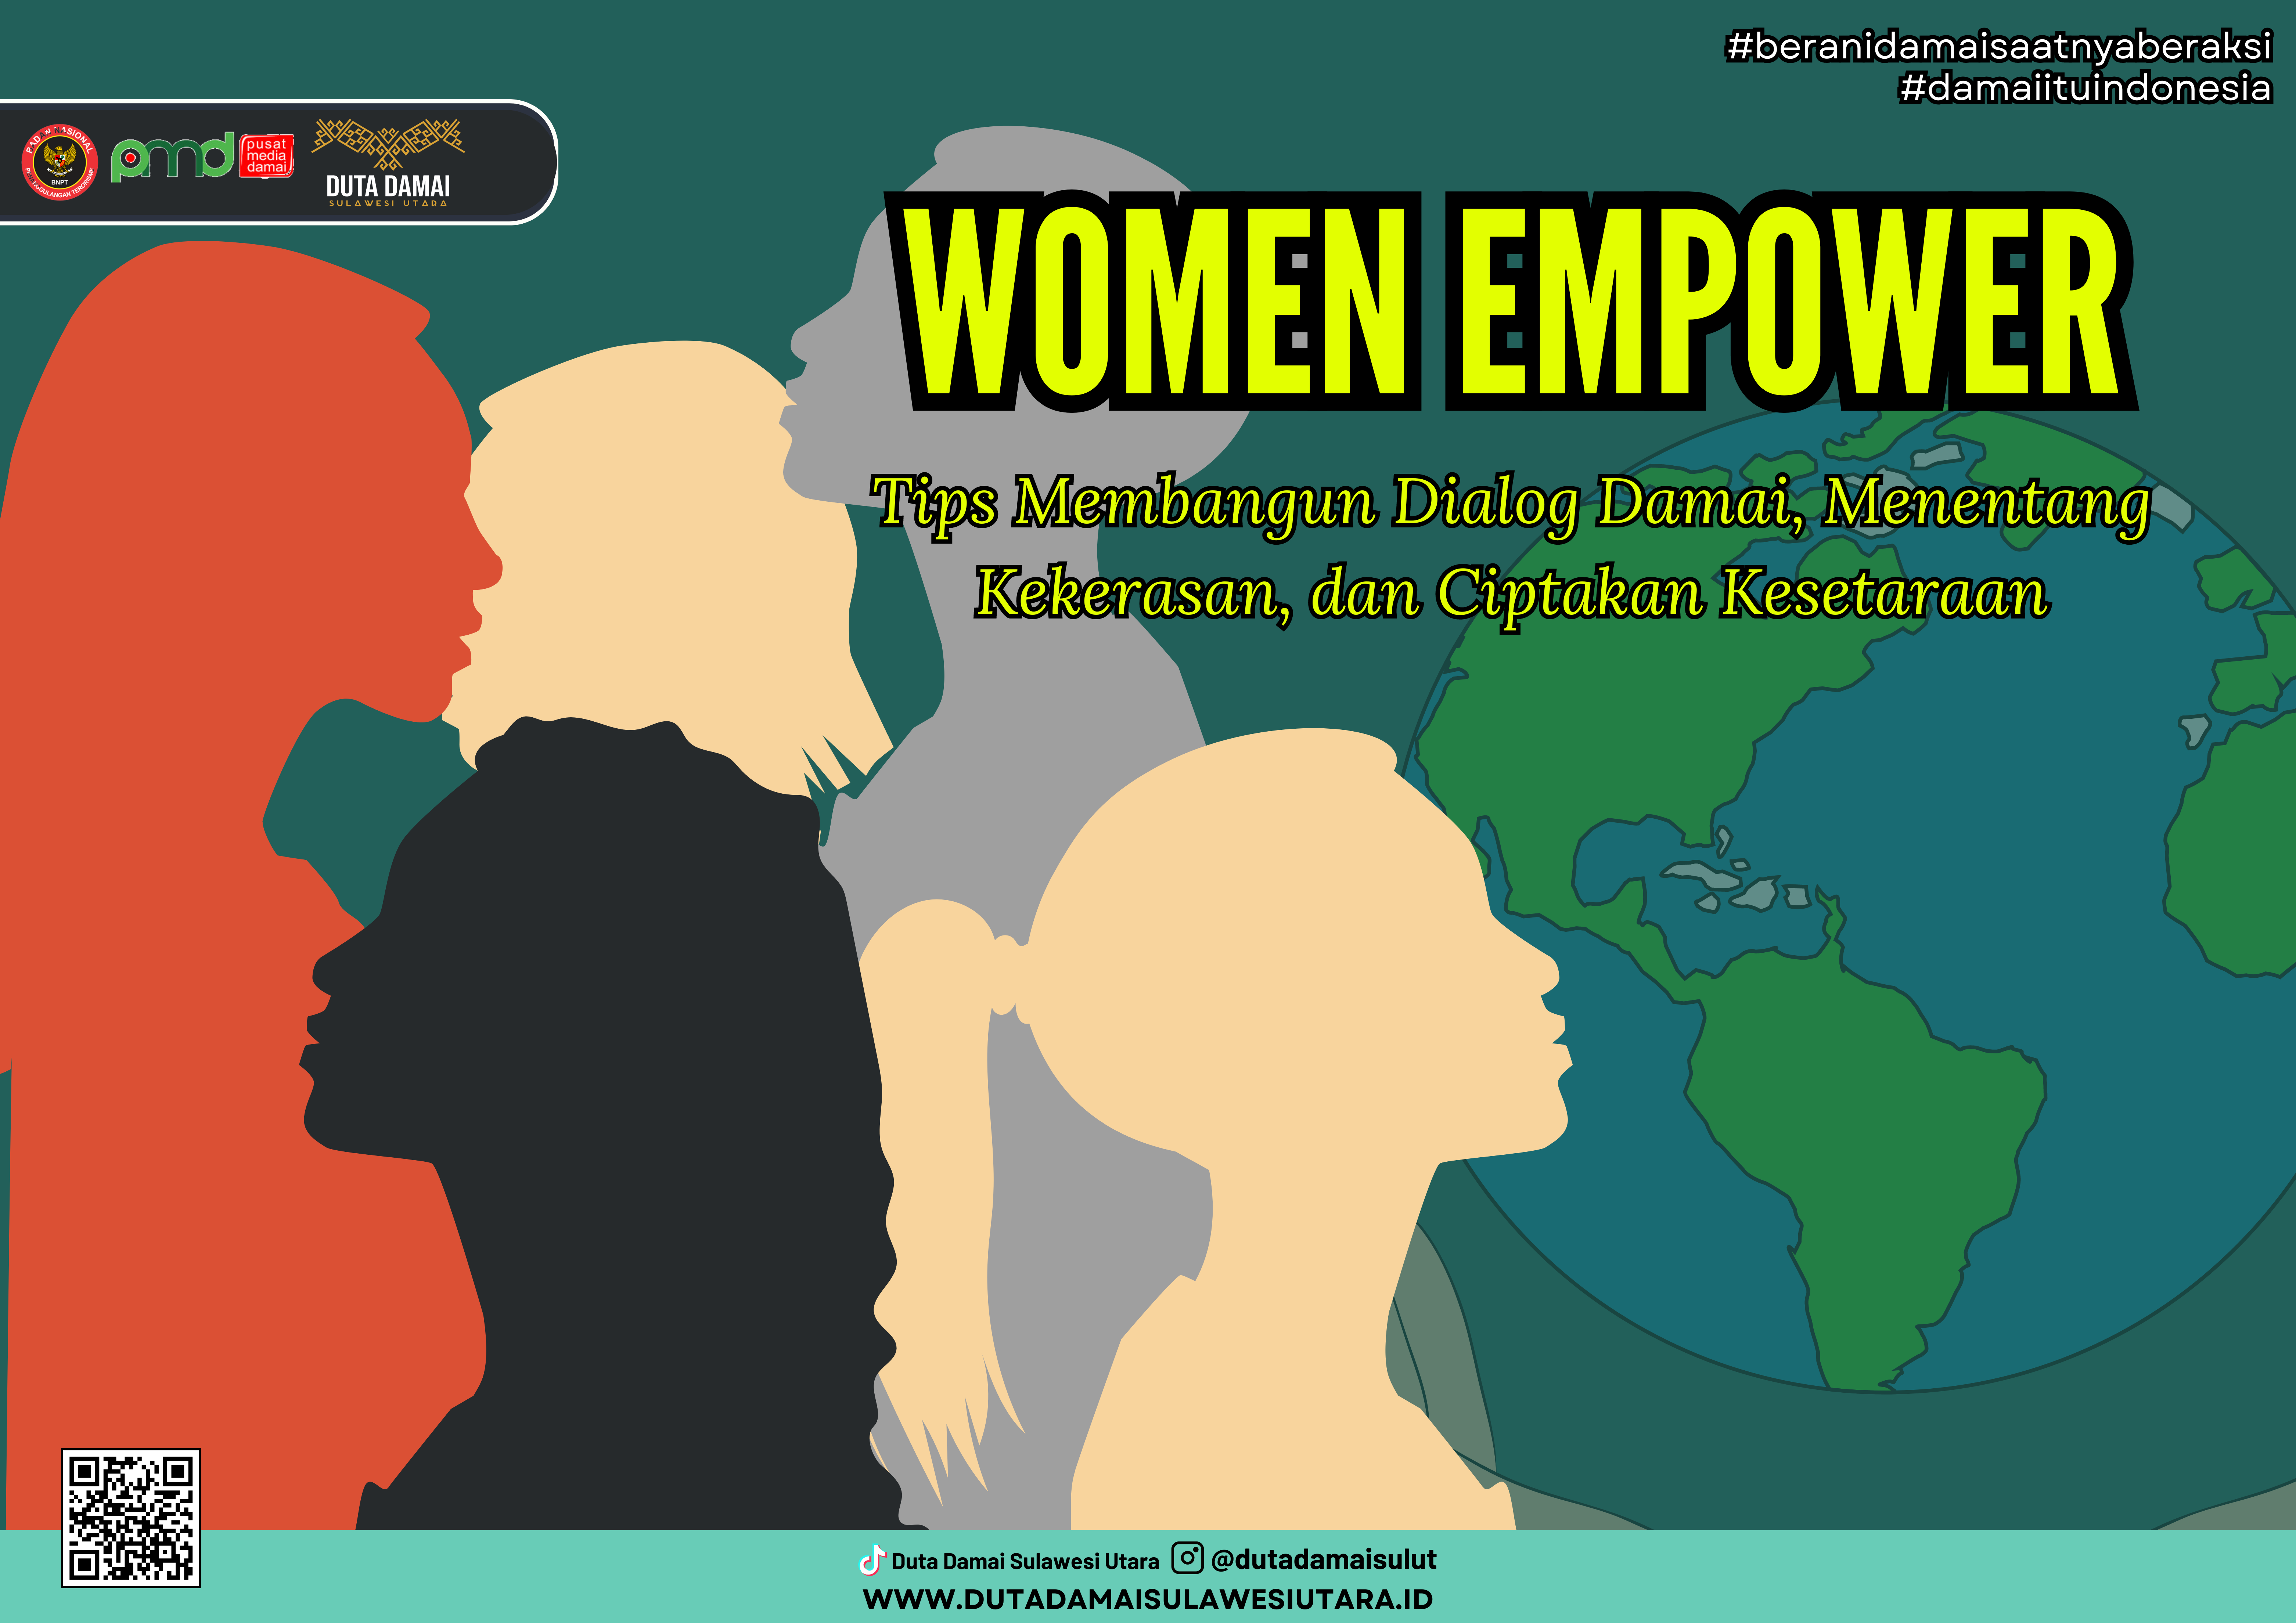 Women Empower: Tips Membangun Dialog Damai, Menentang Kekerasan, dan Ciptakan Kesetaraan